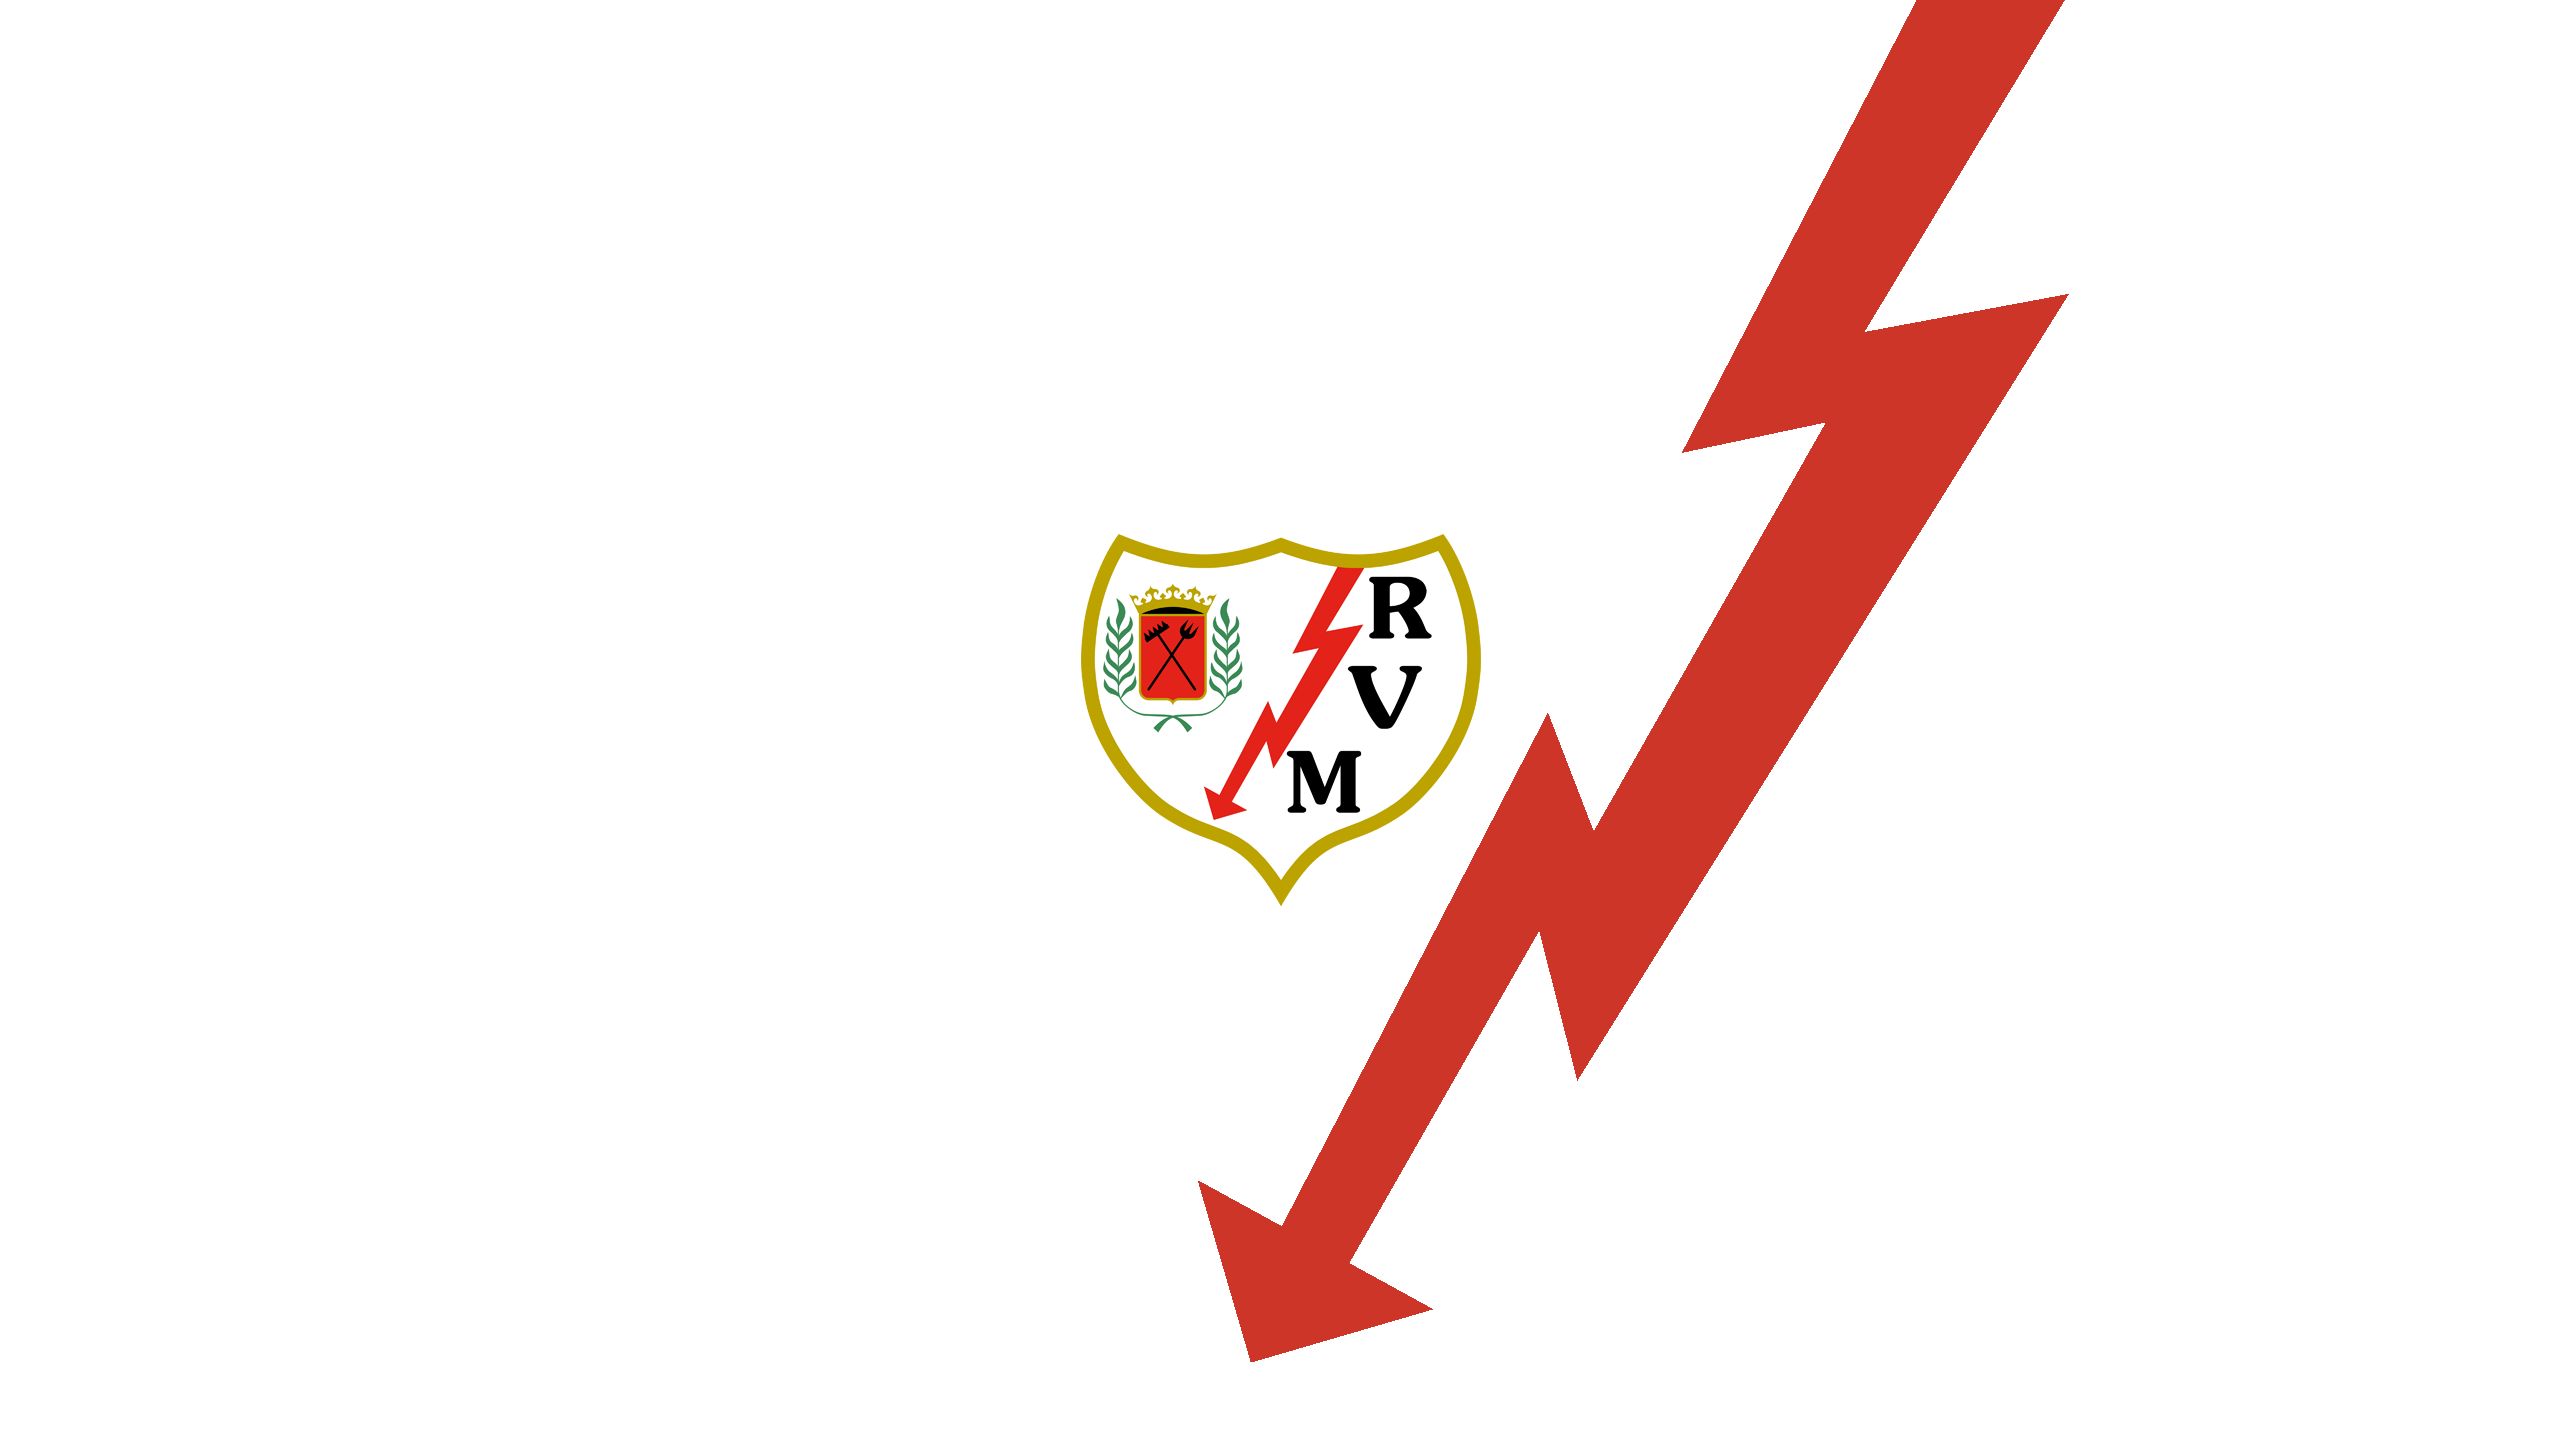 Baixar papel de parede para celular de Esportes, Futebol, Logotipo, Emblema, Rayo Vallecano gratuito.